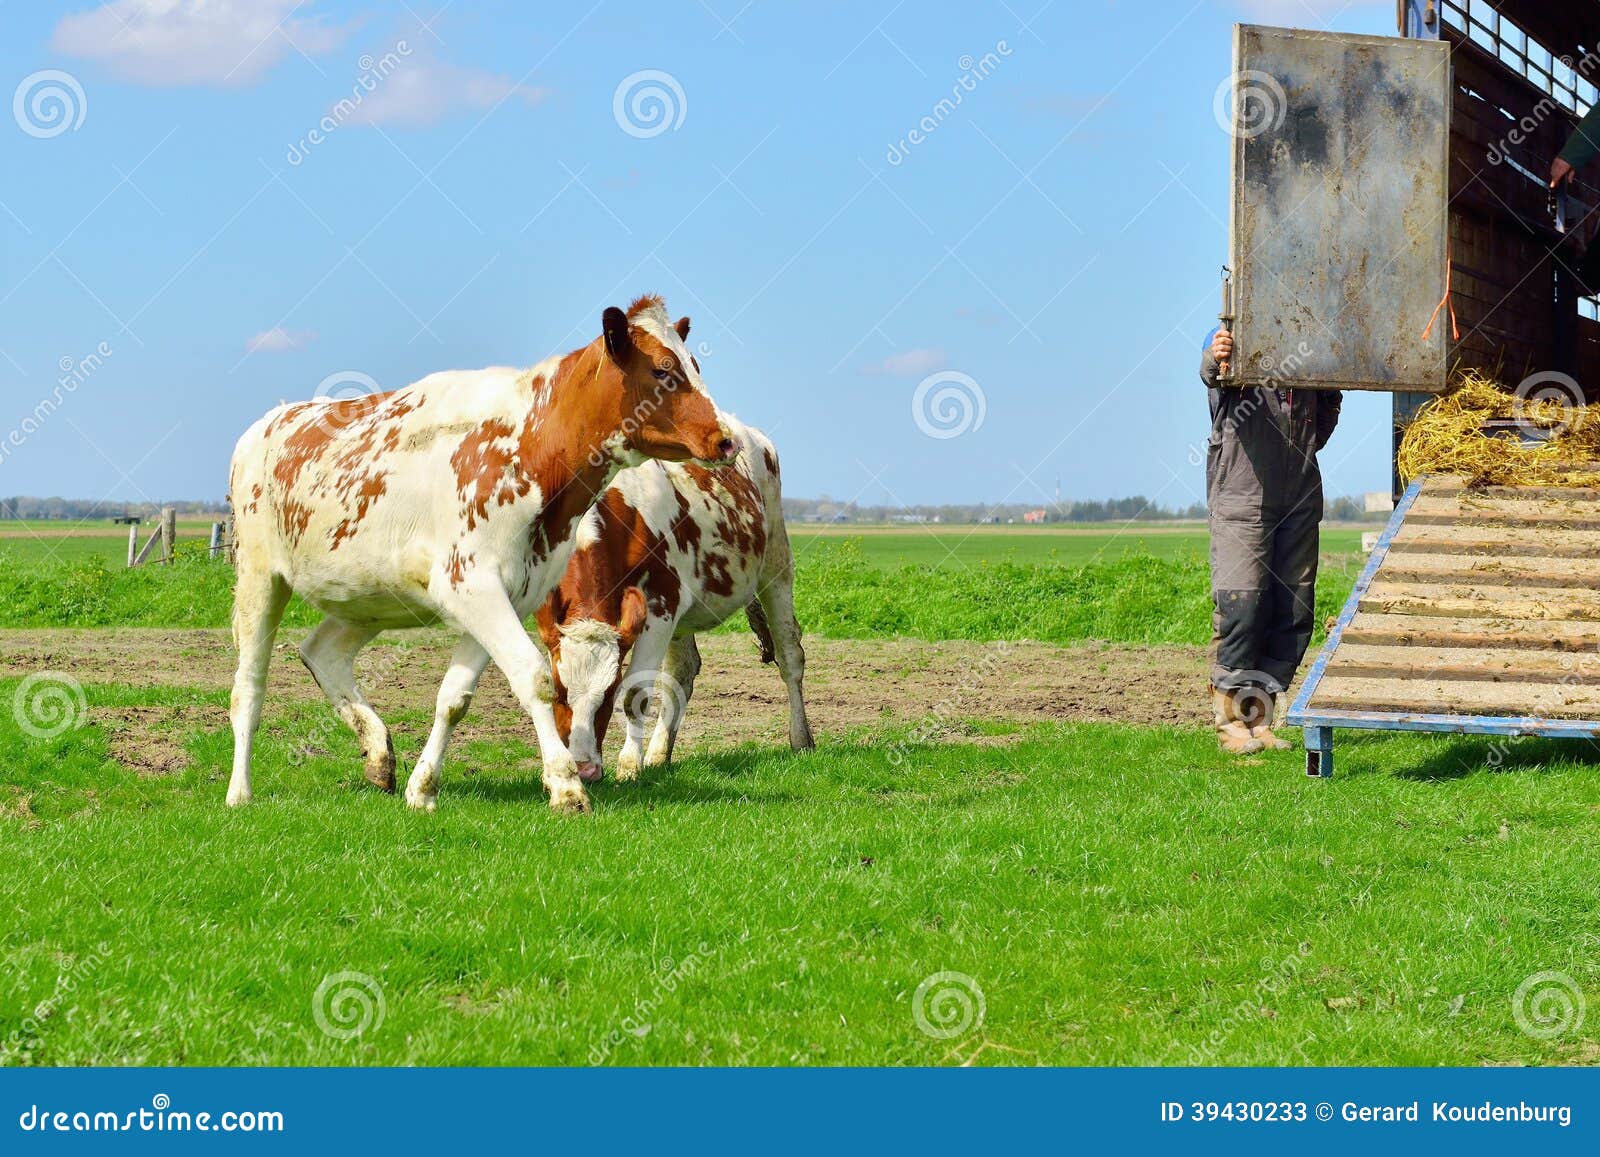 Cows on Livestock Transport Stock Image - Image of farming, farmland ...